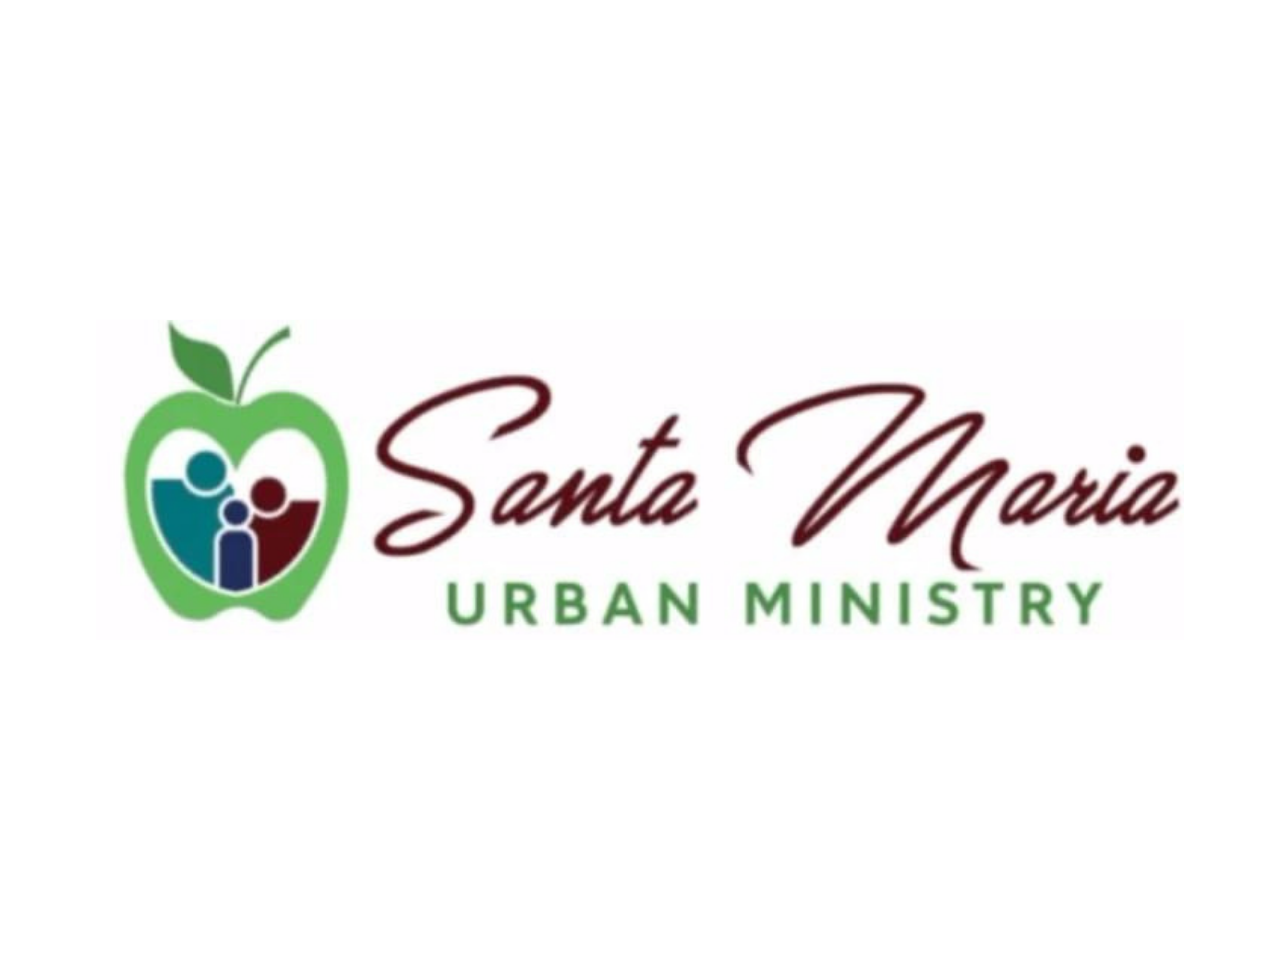 Santa Maria Urban Ministry